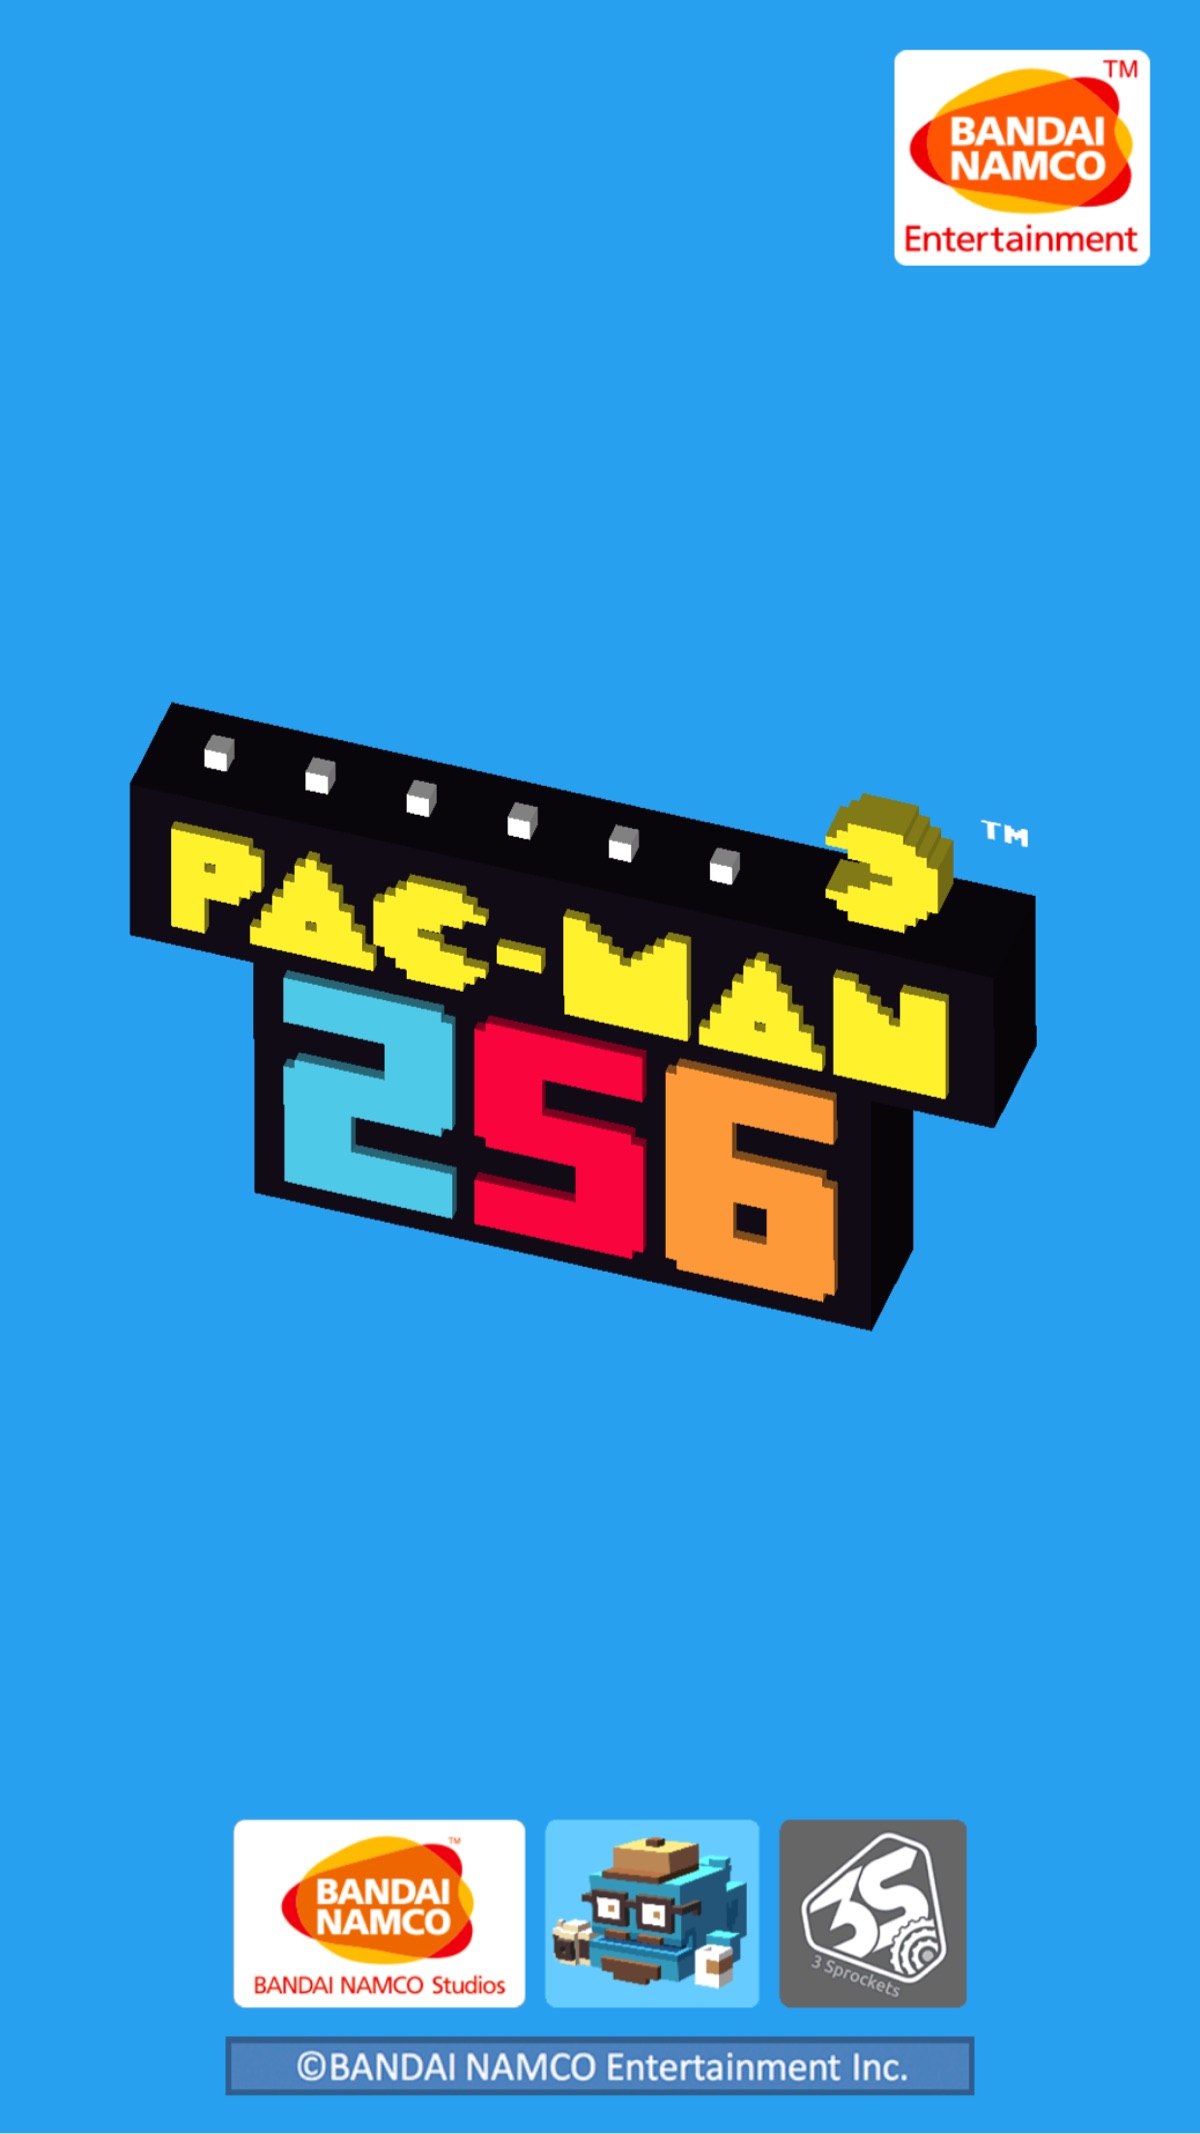 PAC-MAN 256